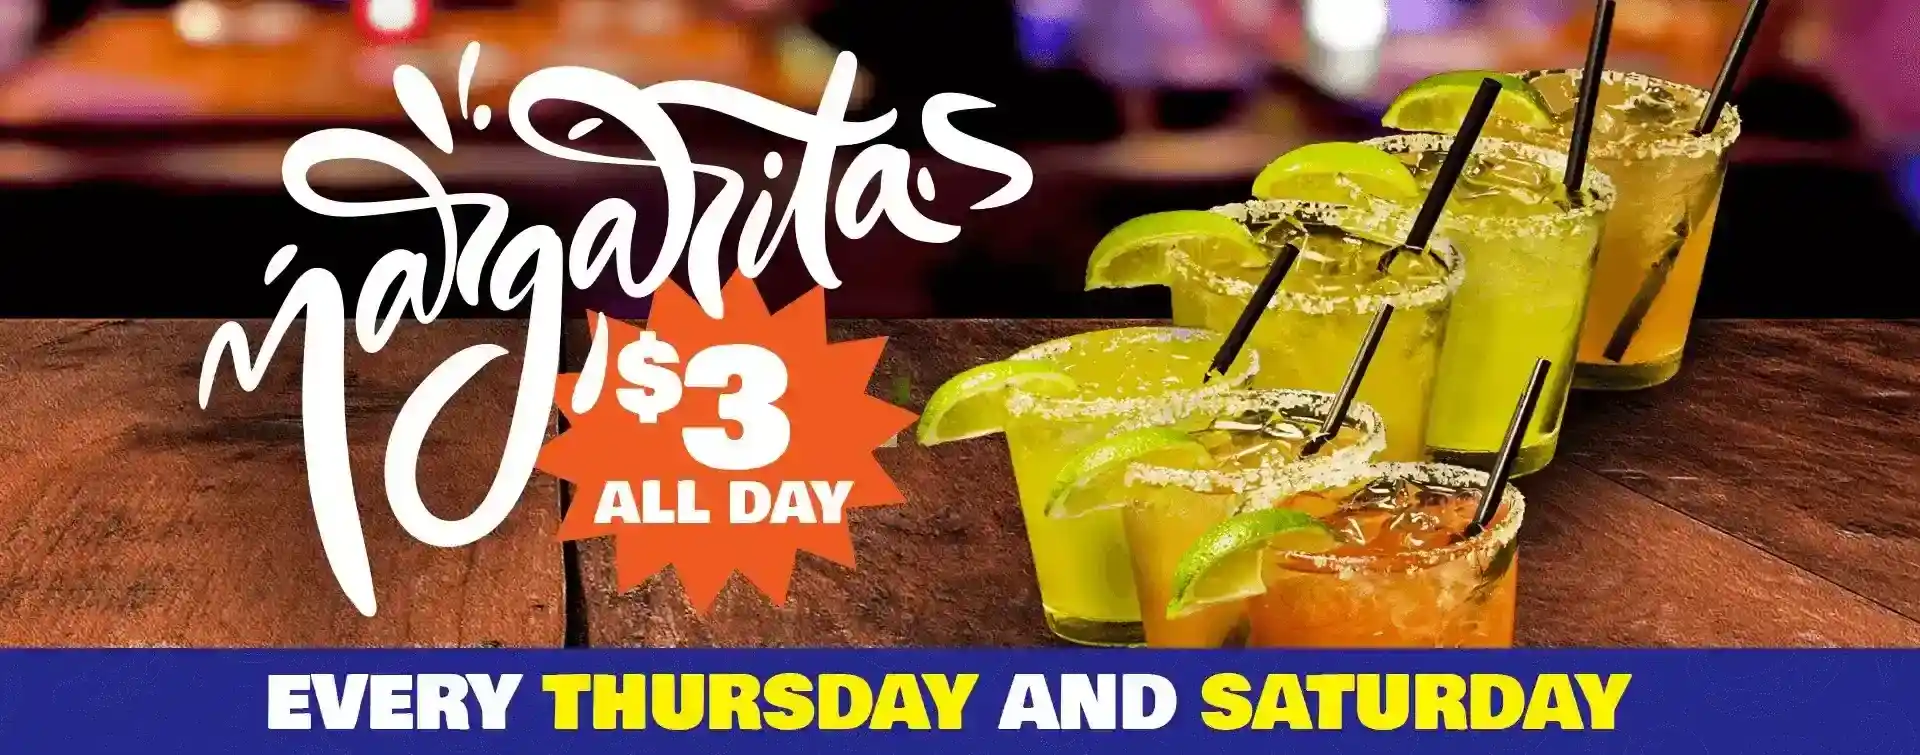 Margarita deal: $3 margaritas every Thursday and Saturday